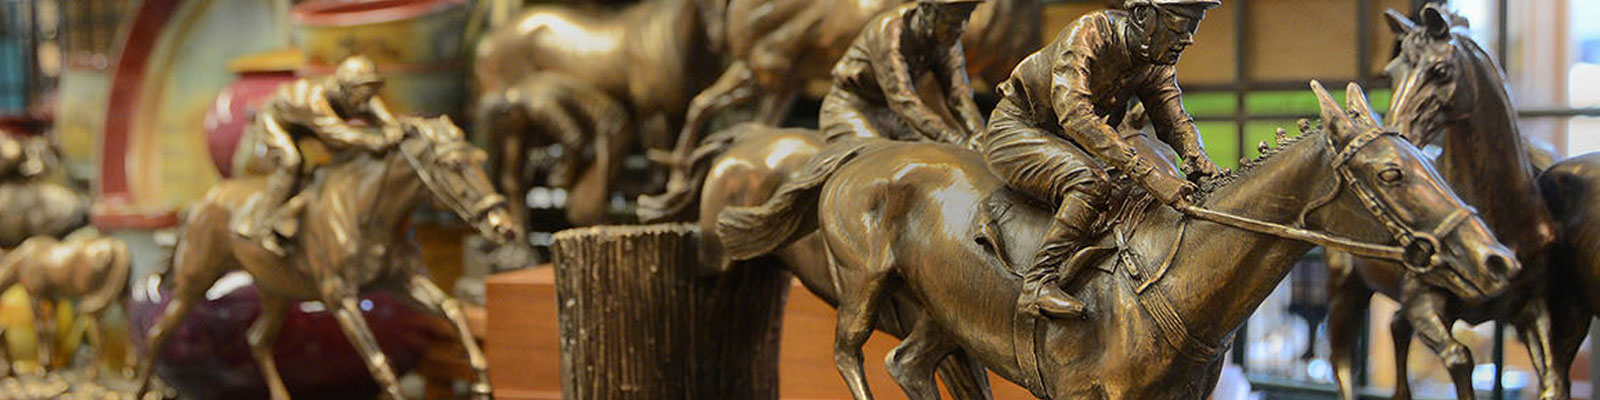 Horse racing statues at Impressions of Saratoga